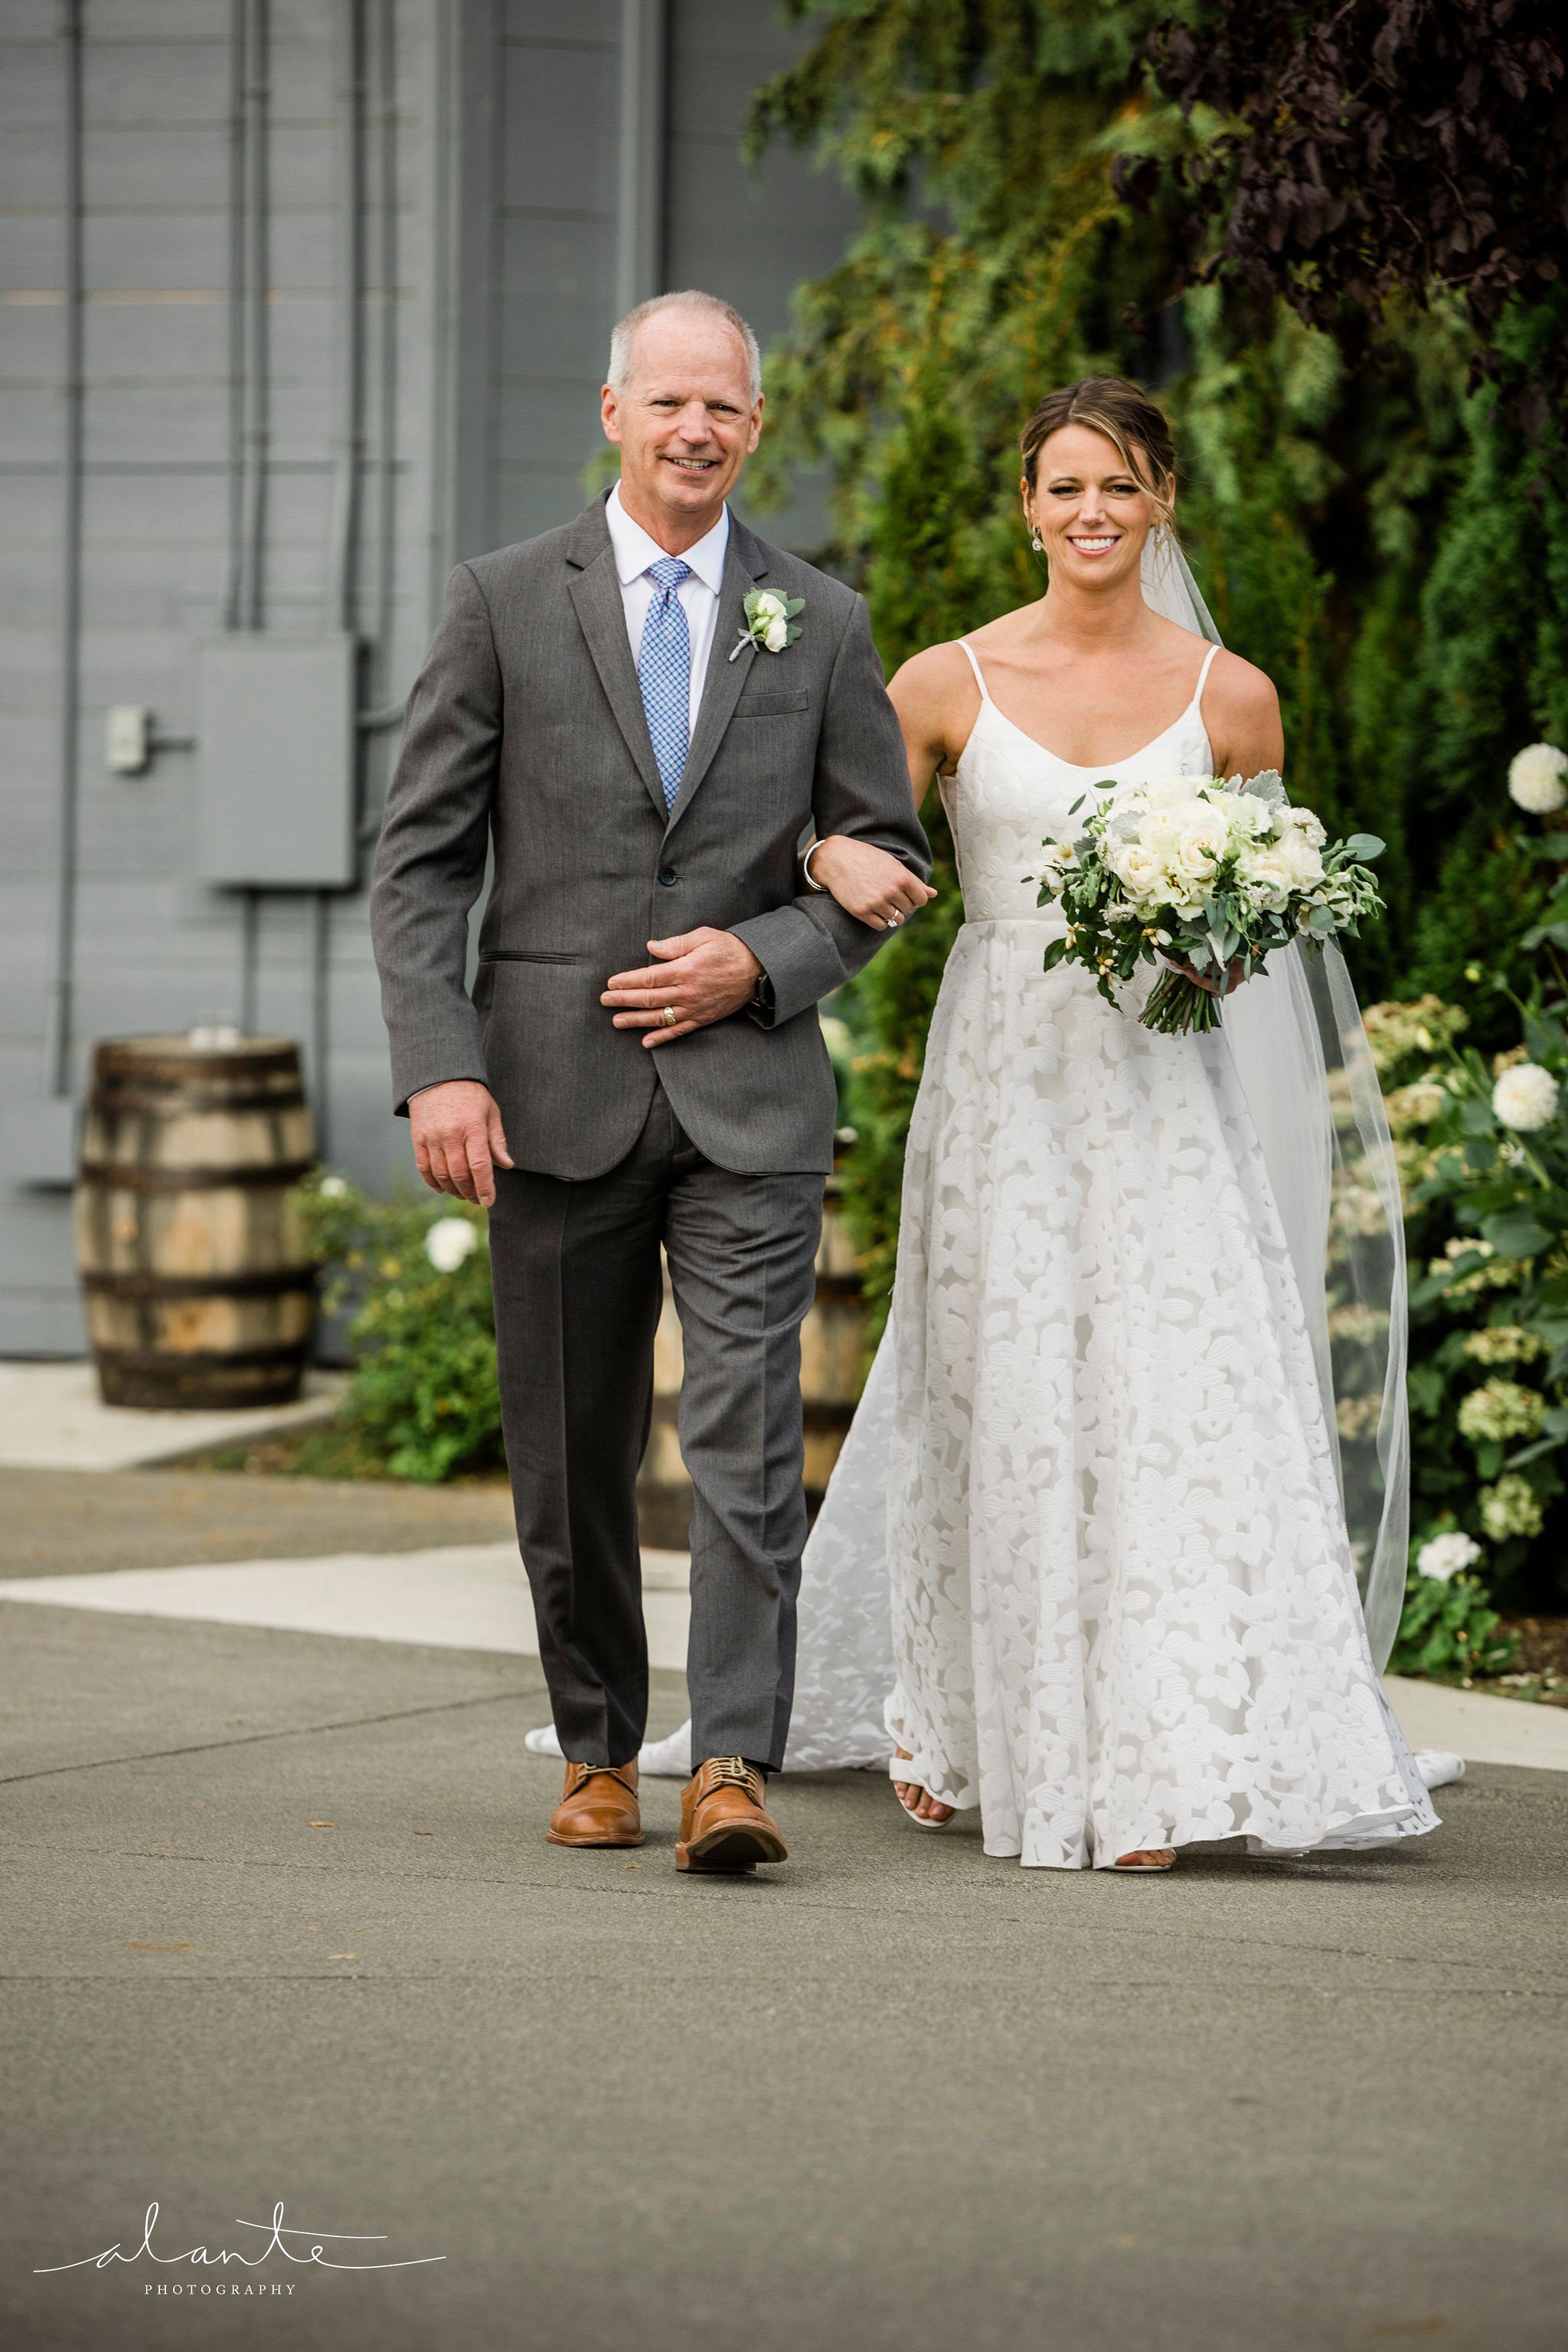 Alante-Photography-Seattle-Washington-Wedding-Dockside-Dukes-Lake-Union-109.jpg